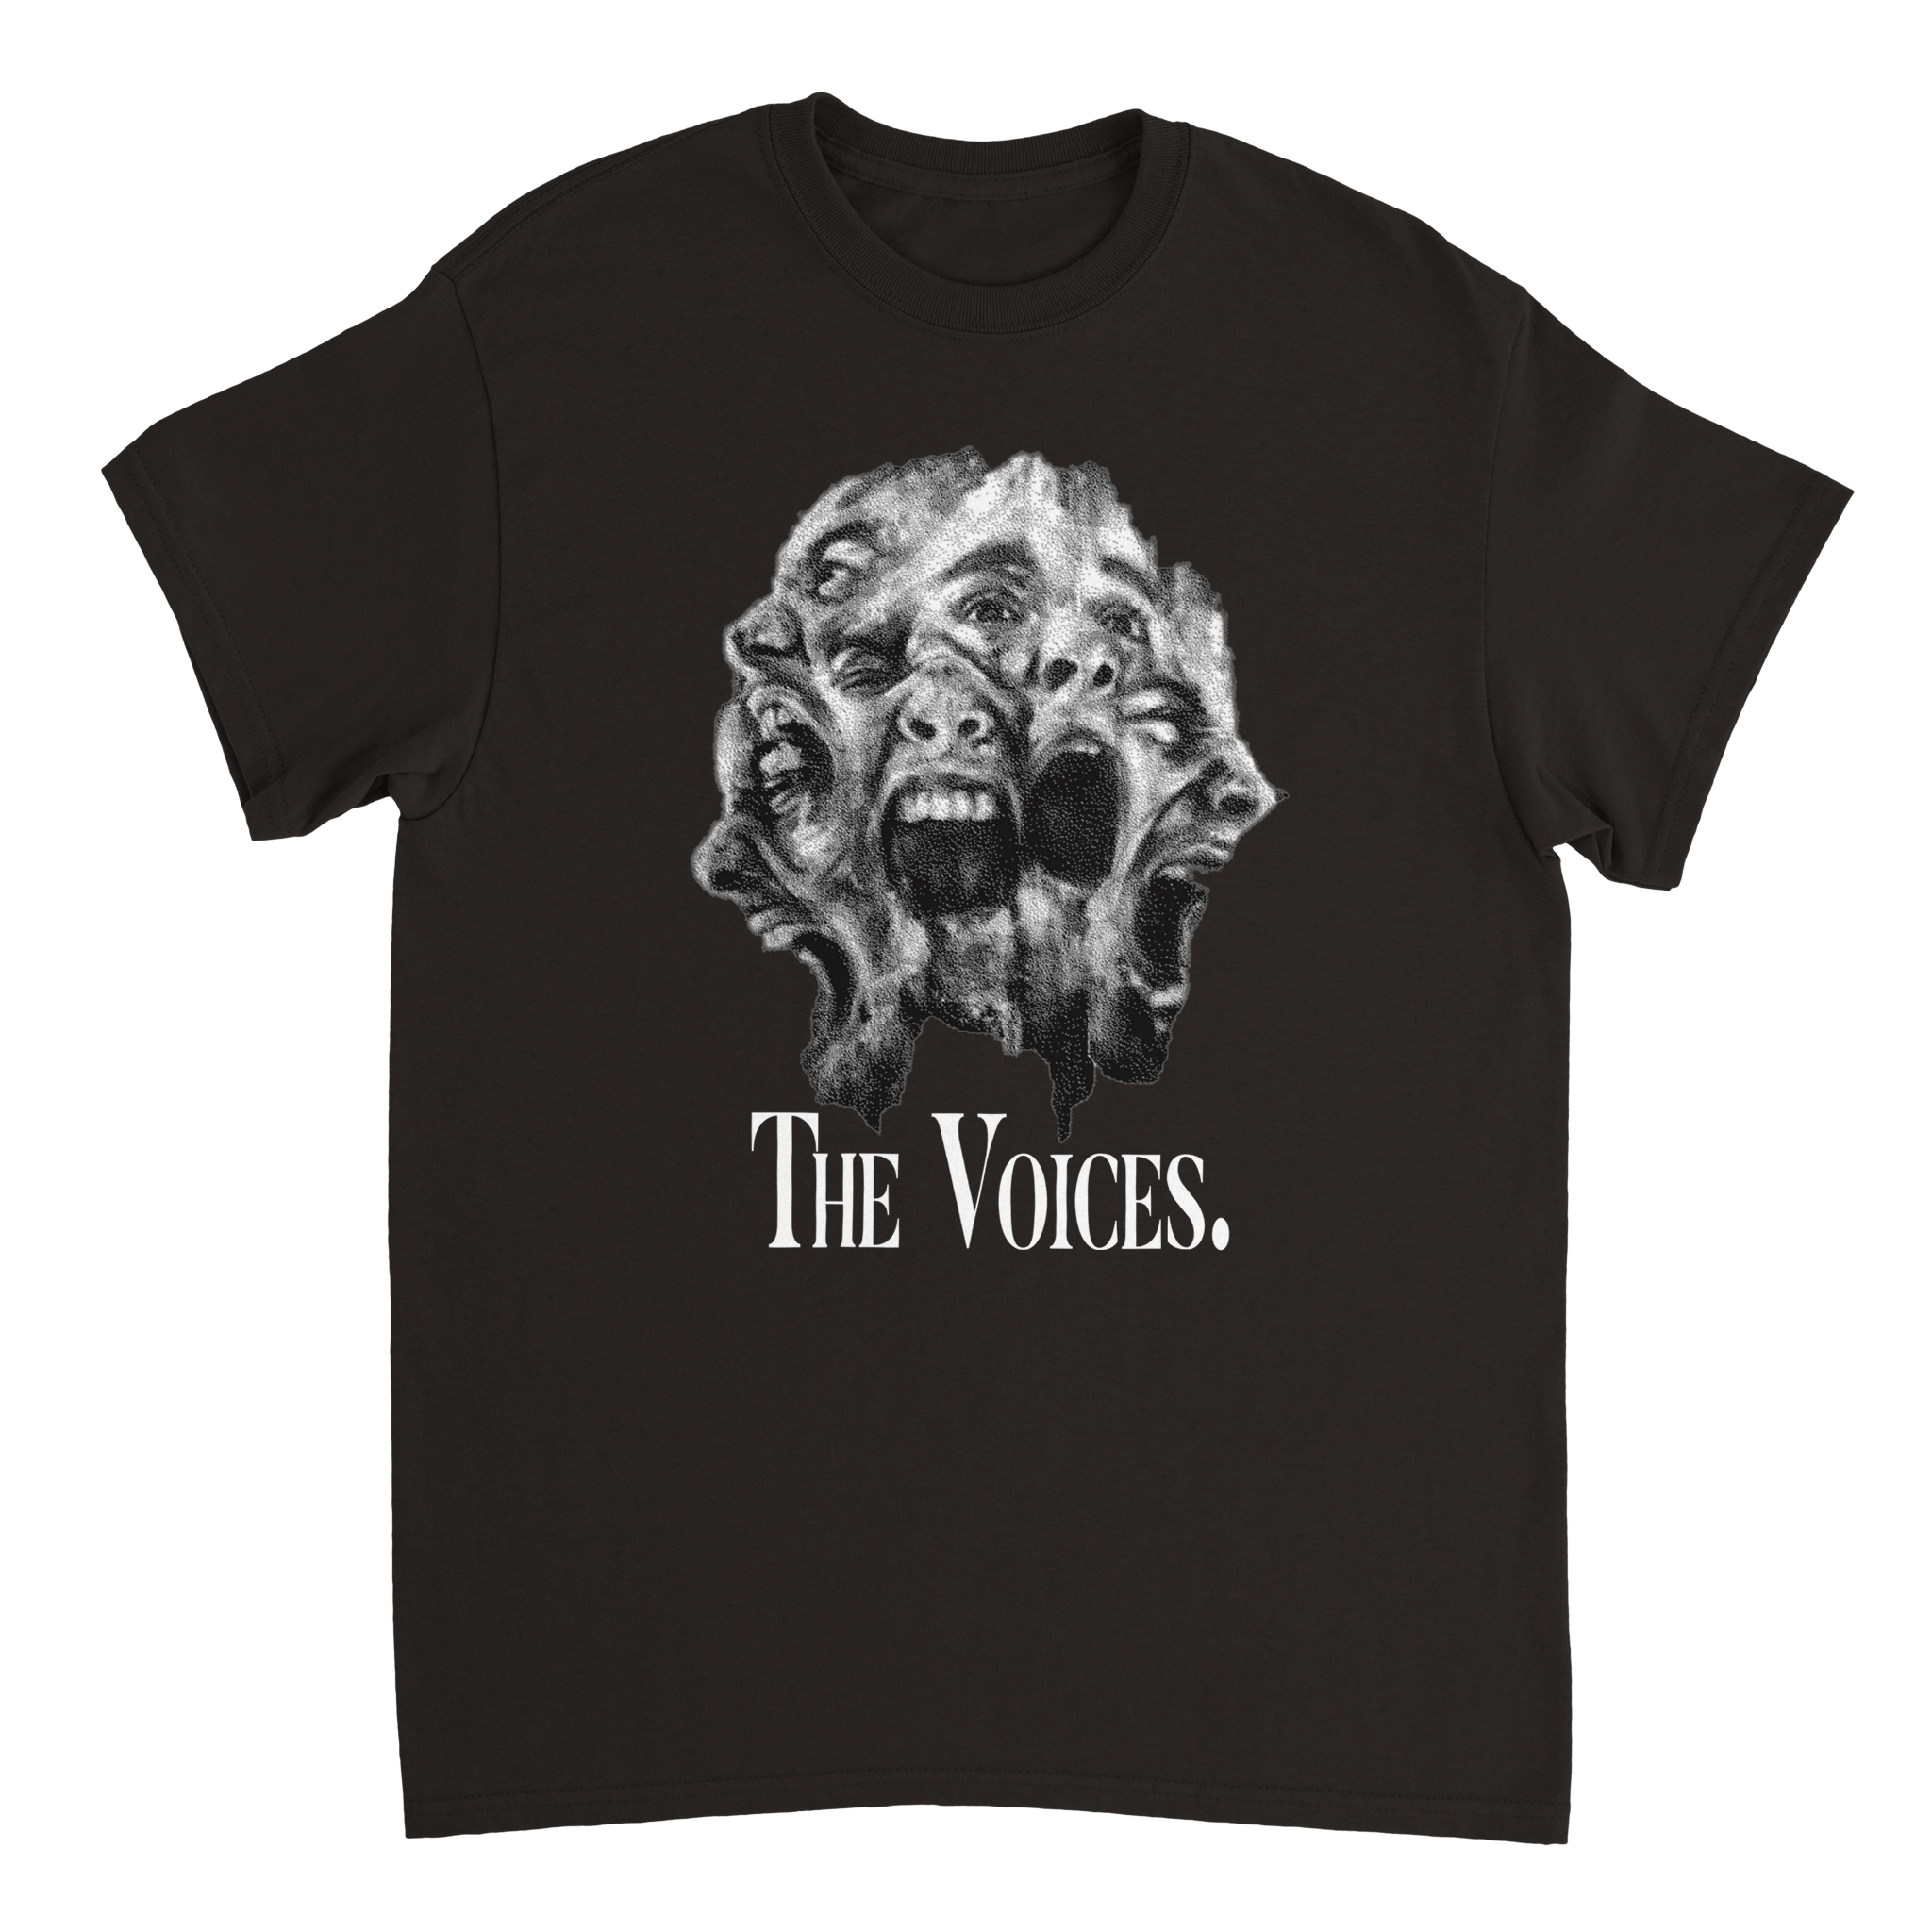 The Voices T-shirt